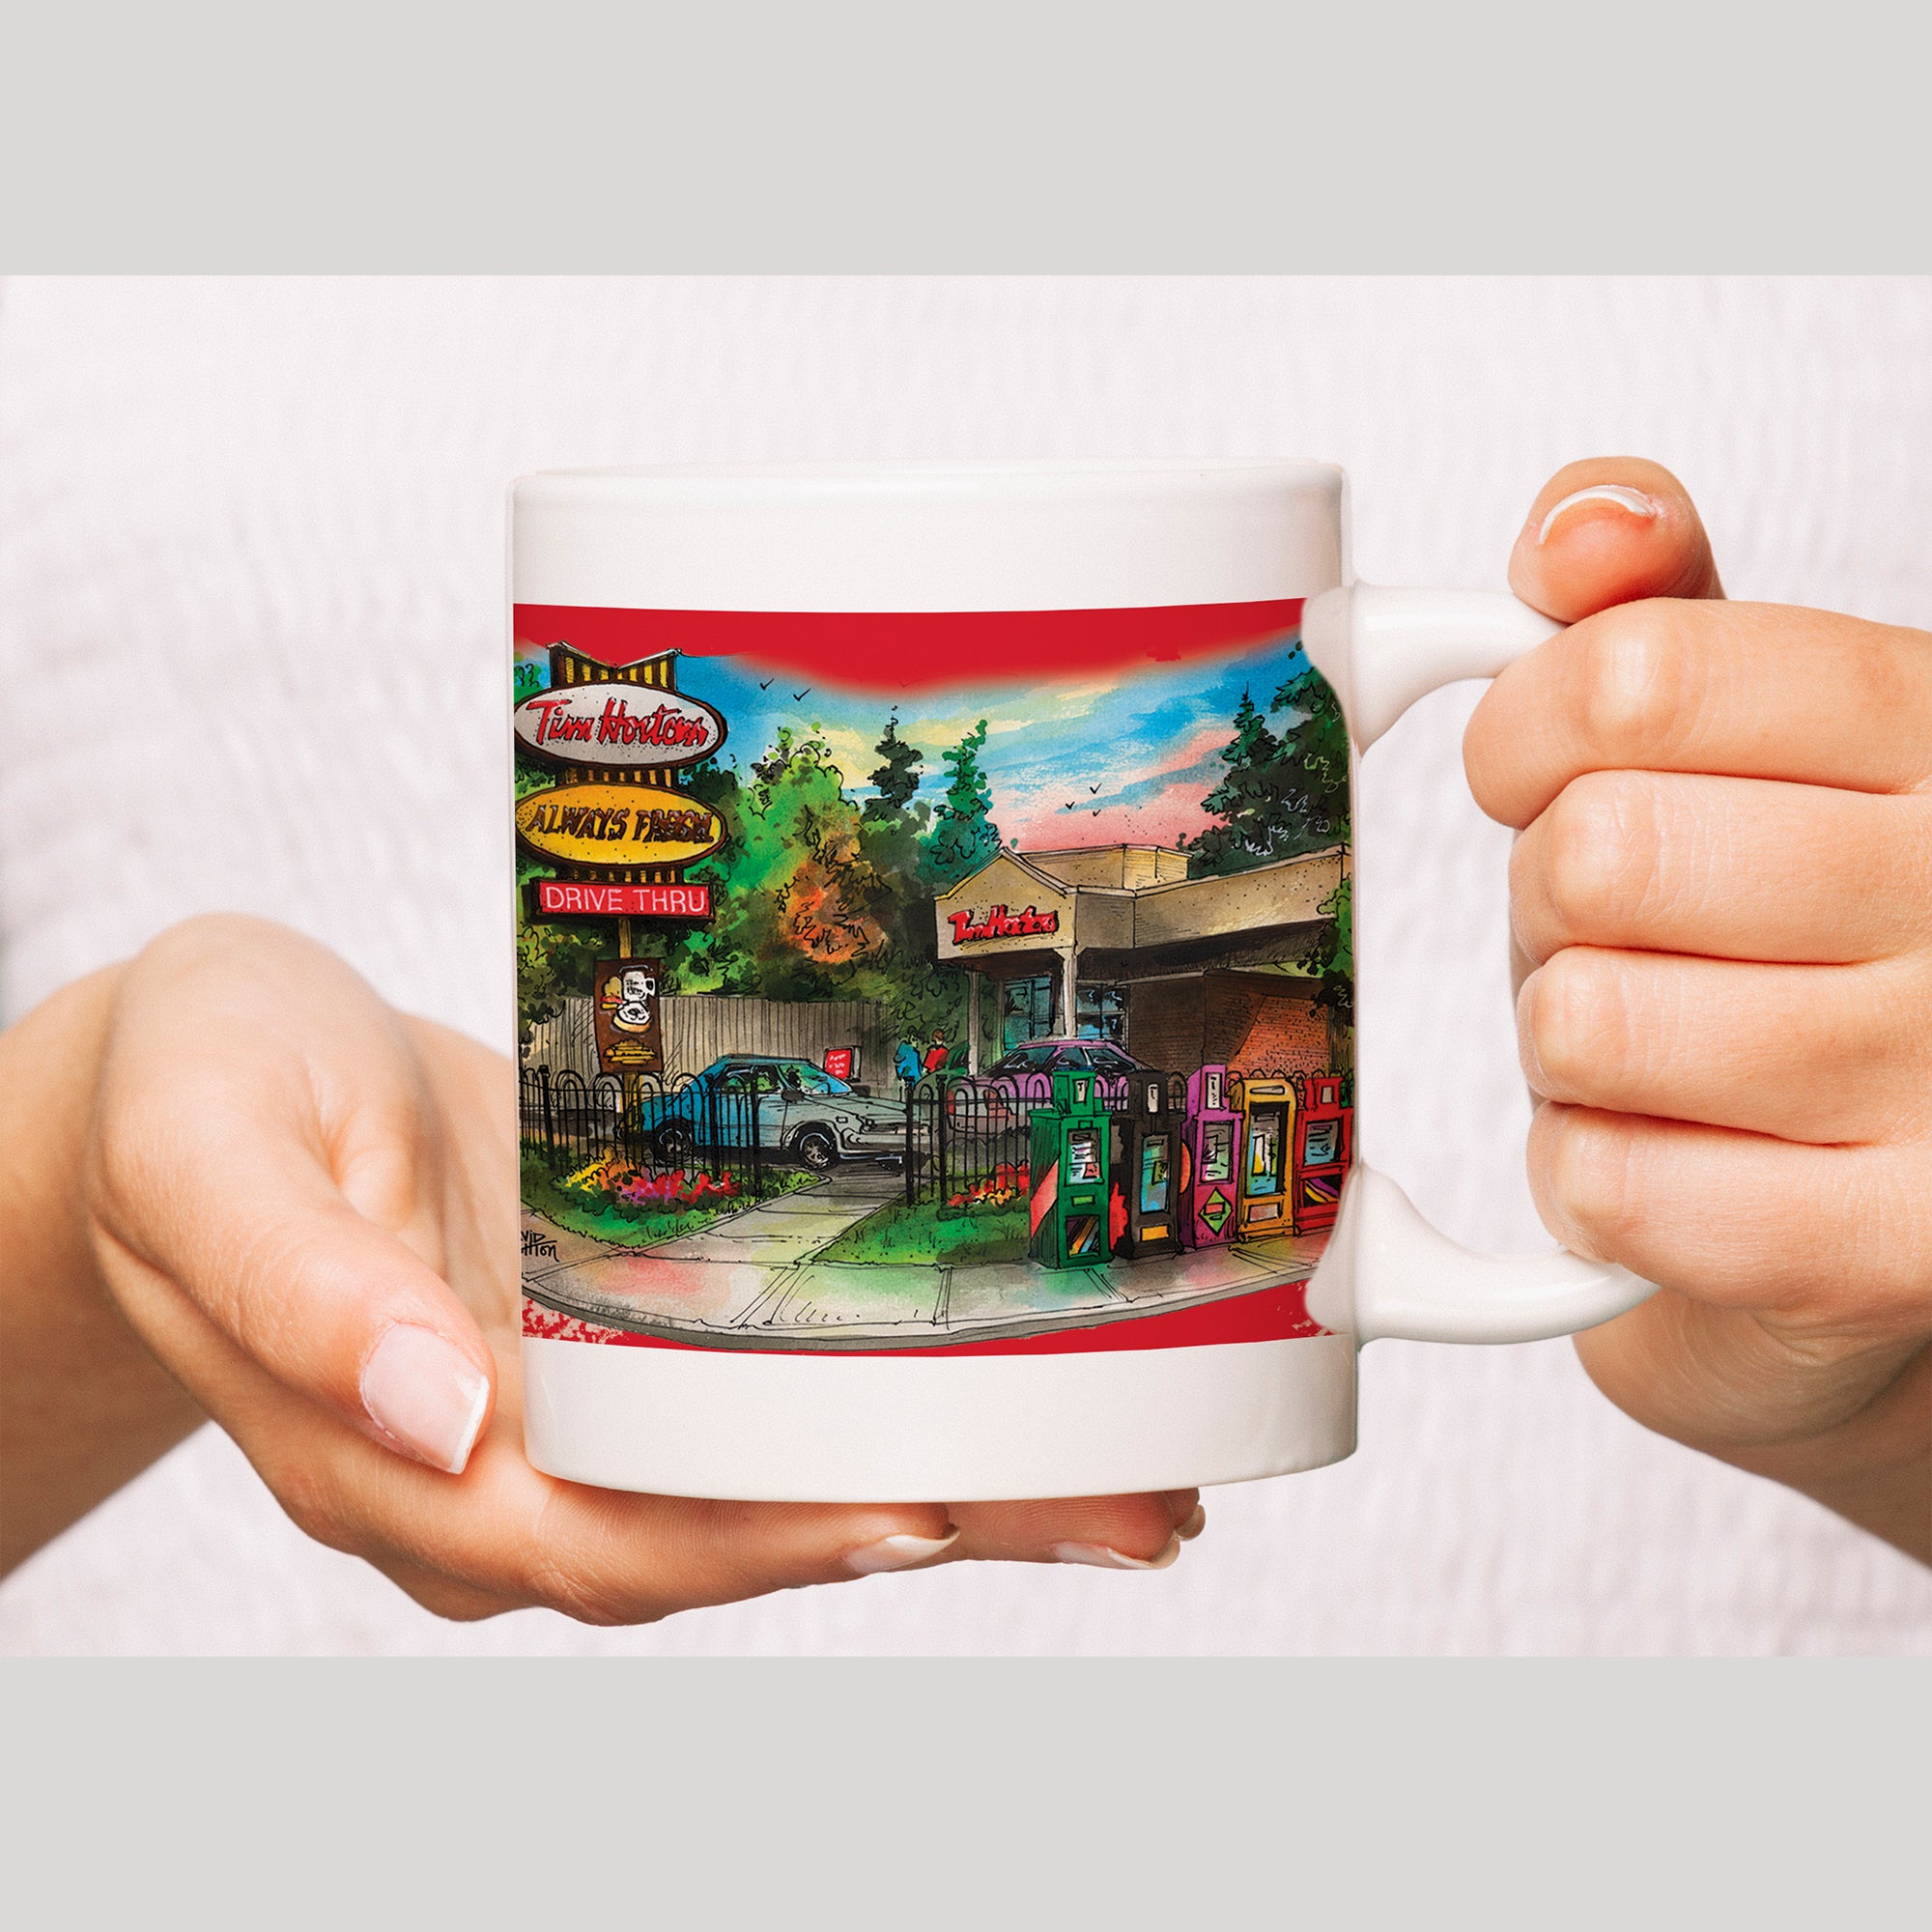 Tim Horton's Coffee Mug | Toronto Coffee Mugs | Toronto Souvenirs | Hockey Souvenirs | Canada Souvenirs | Canada Coffee Mugs